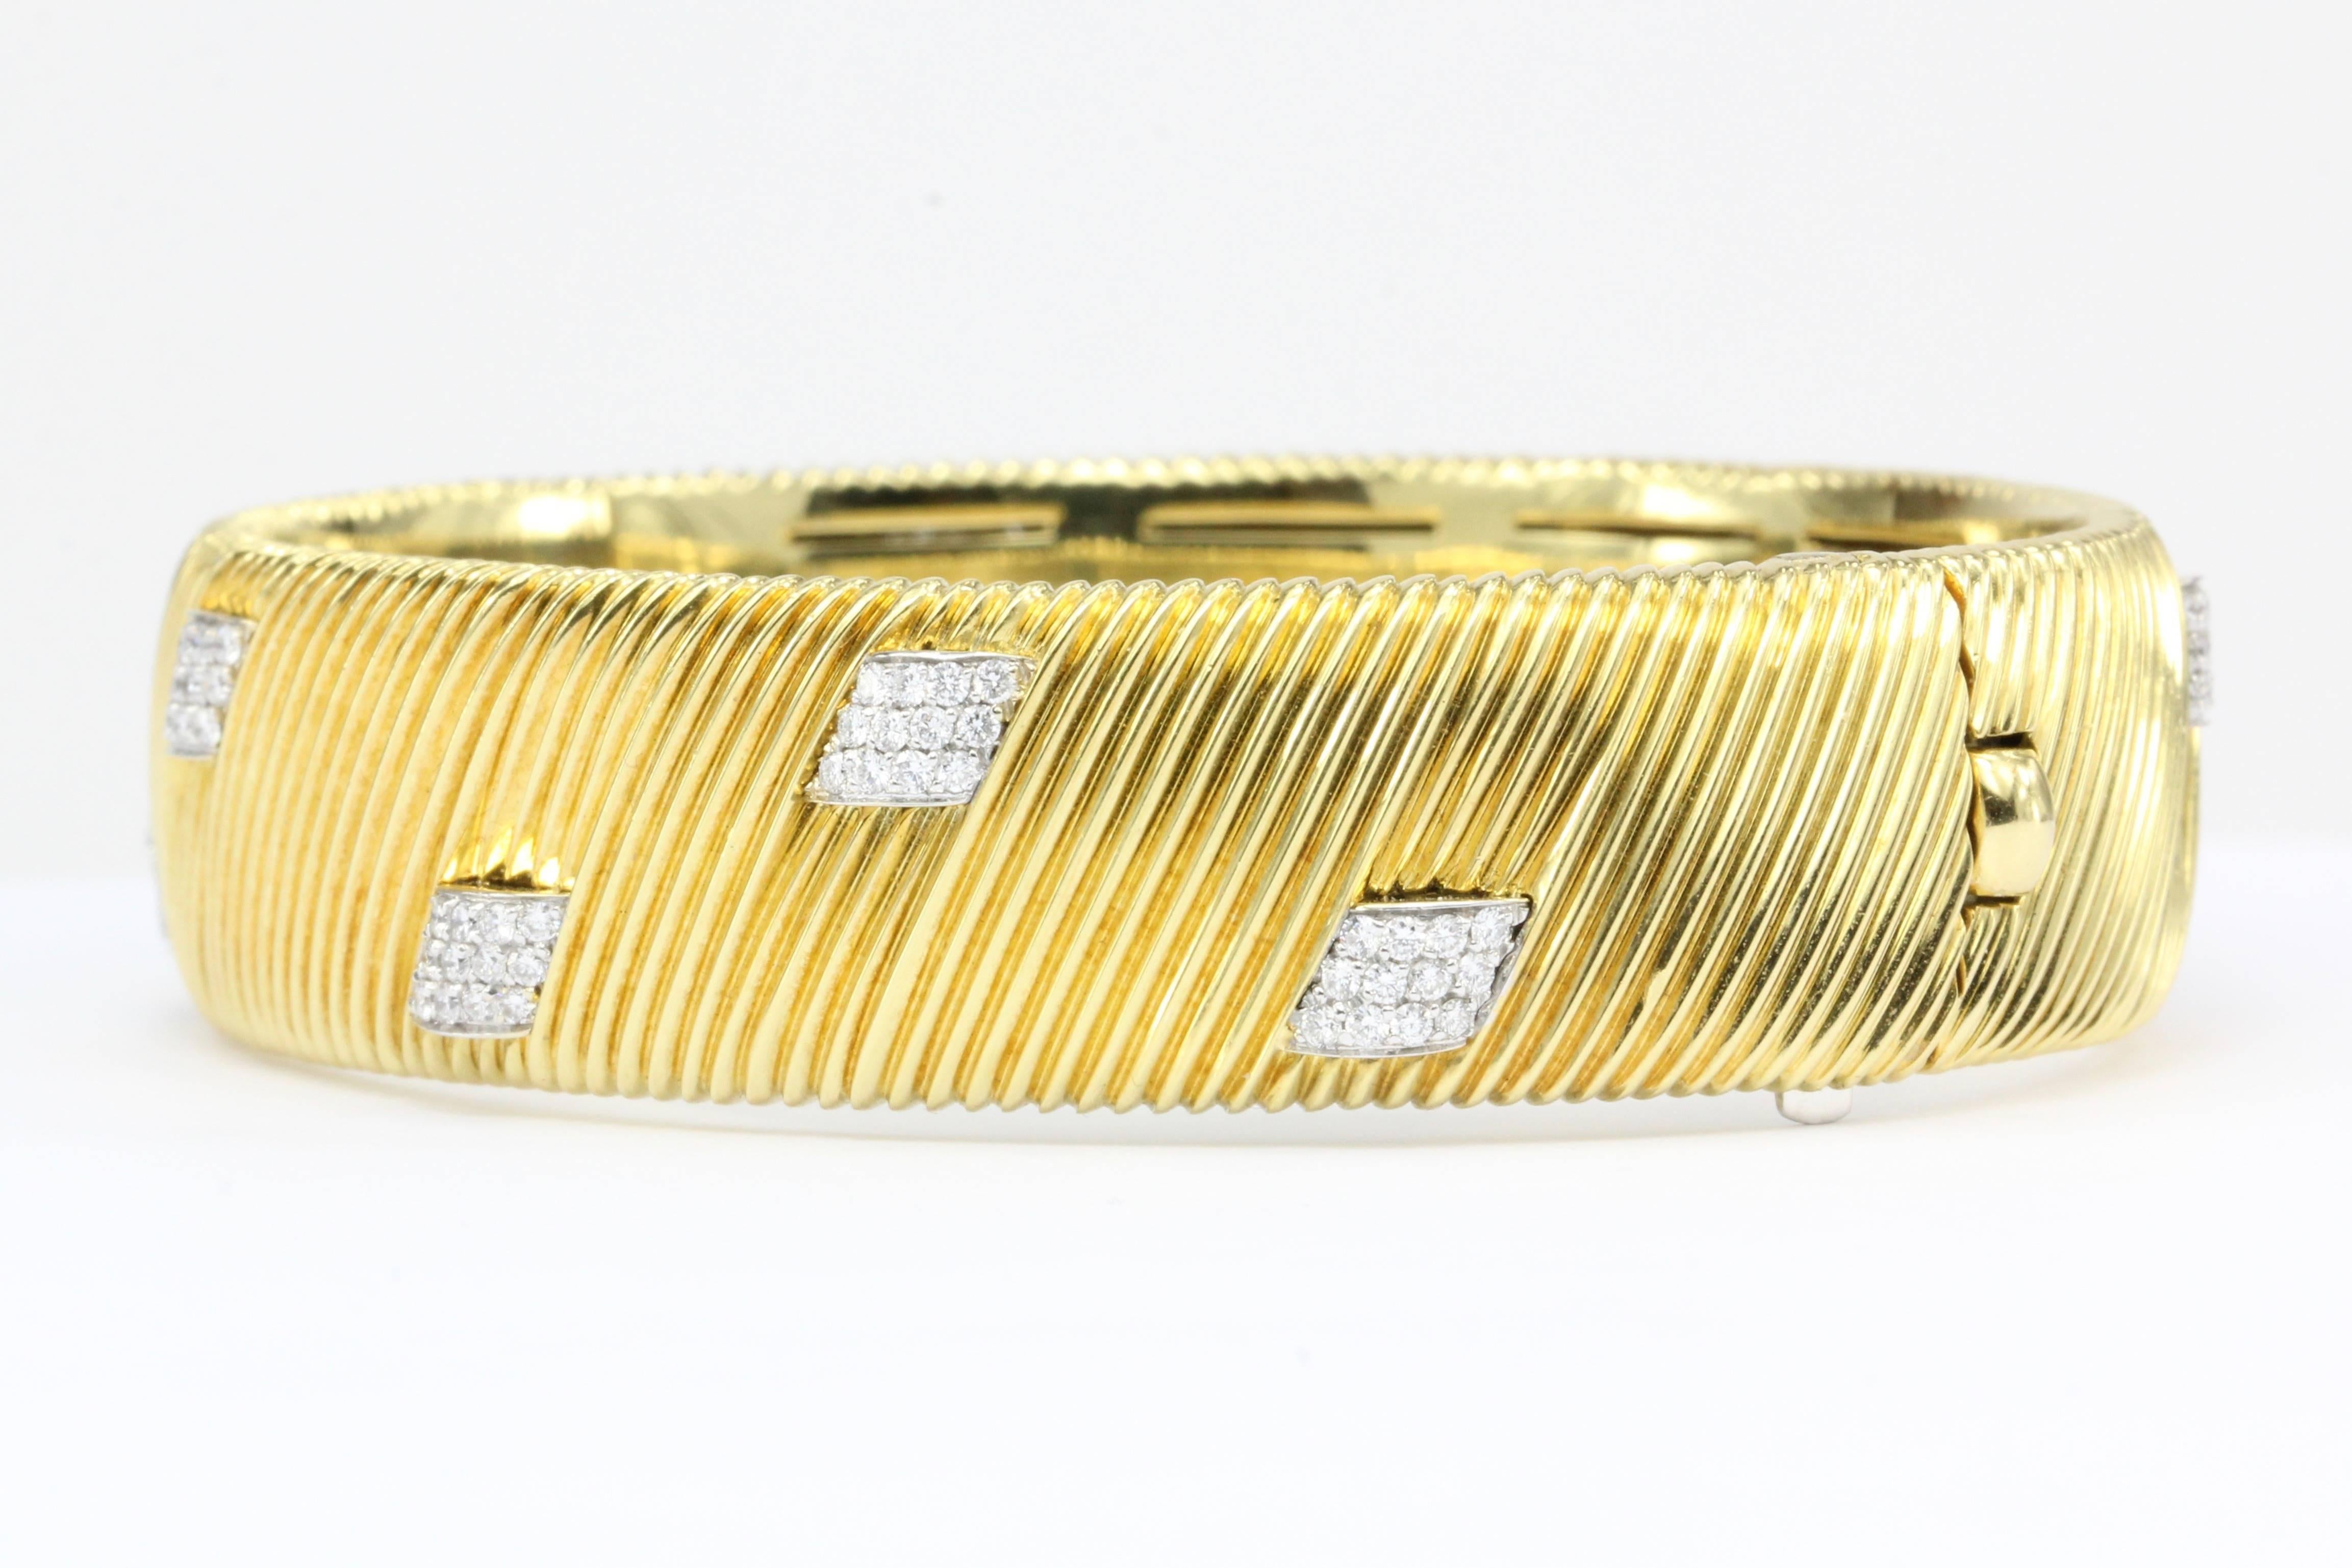 Roberto Coin Appassionata Collection 18K Gold Diamond Bangle Bracelet

Hallmarks: Roberto Coin 18K Italy

Composition: 18k Yellow Gold

Primary Stone: Diamond

Stone Carat: 1 CTW

Bracelet length: 6.5" circumference

Bracelet width: